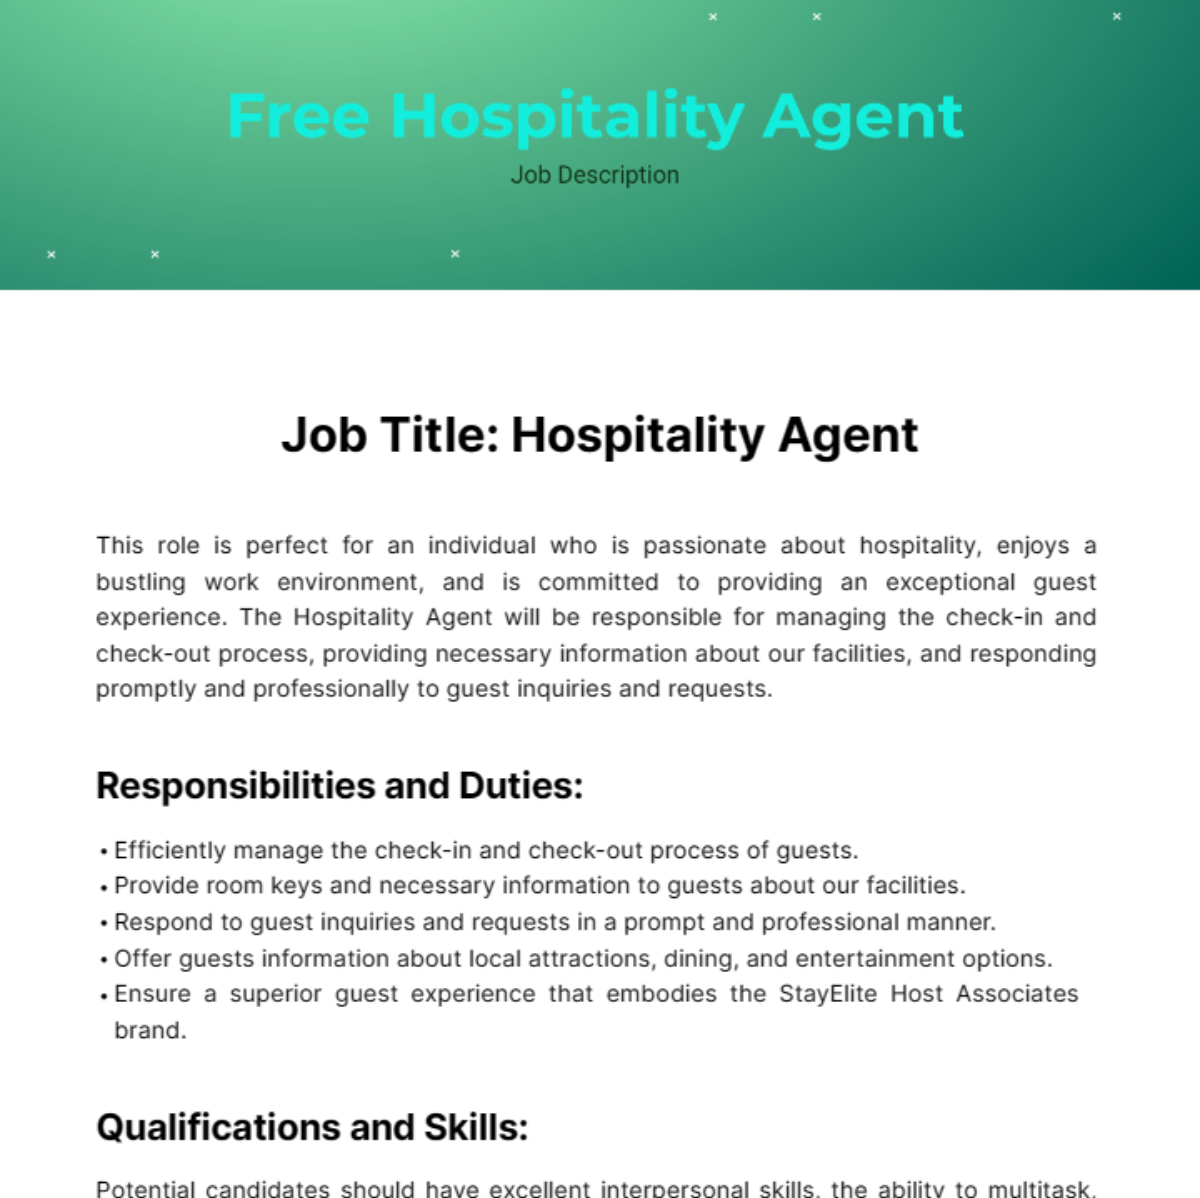 Free Hospitality Agent Job Description Template